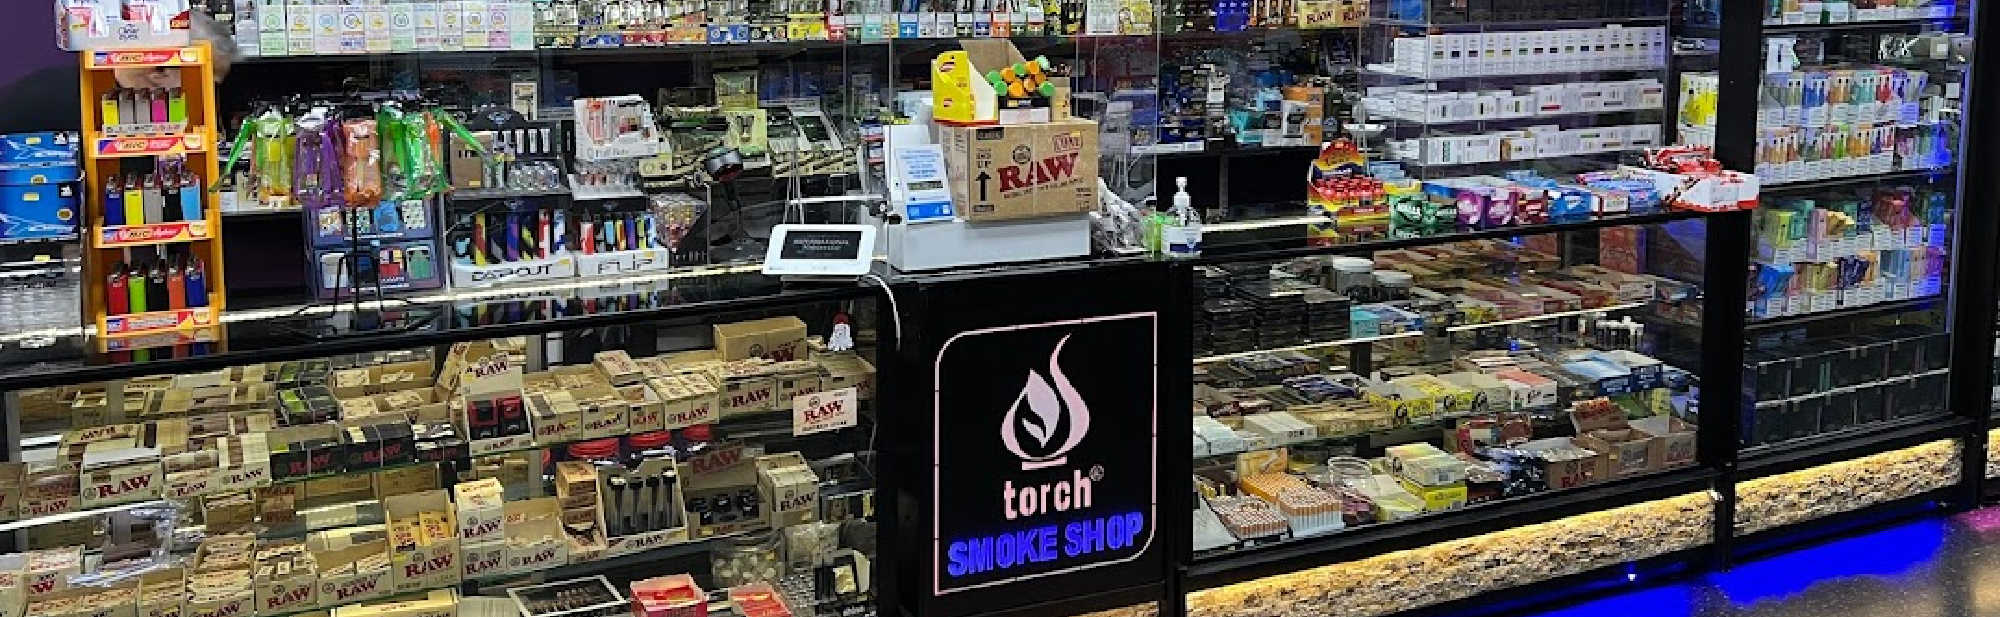 image of torch smoke shop passaic nj